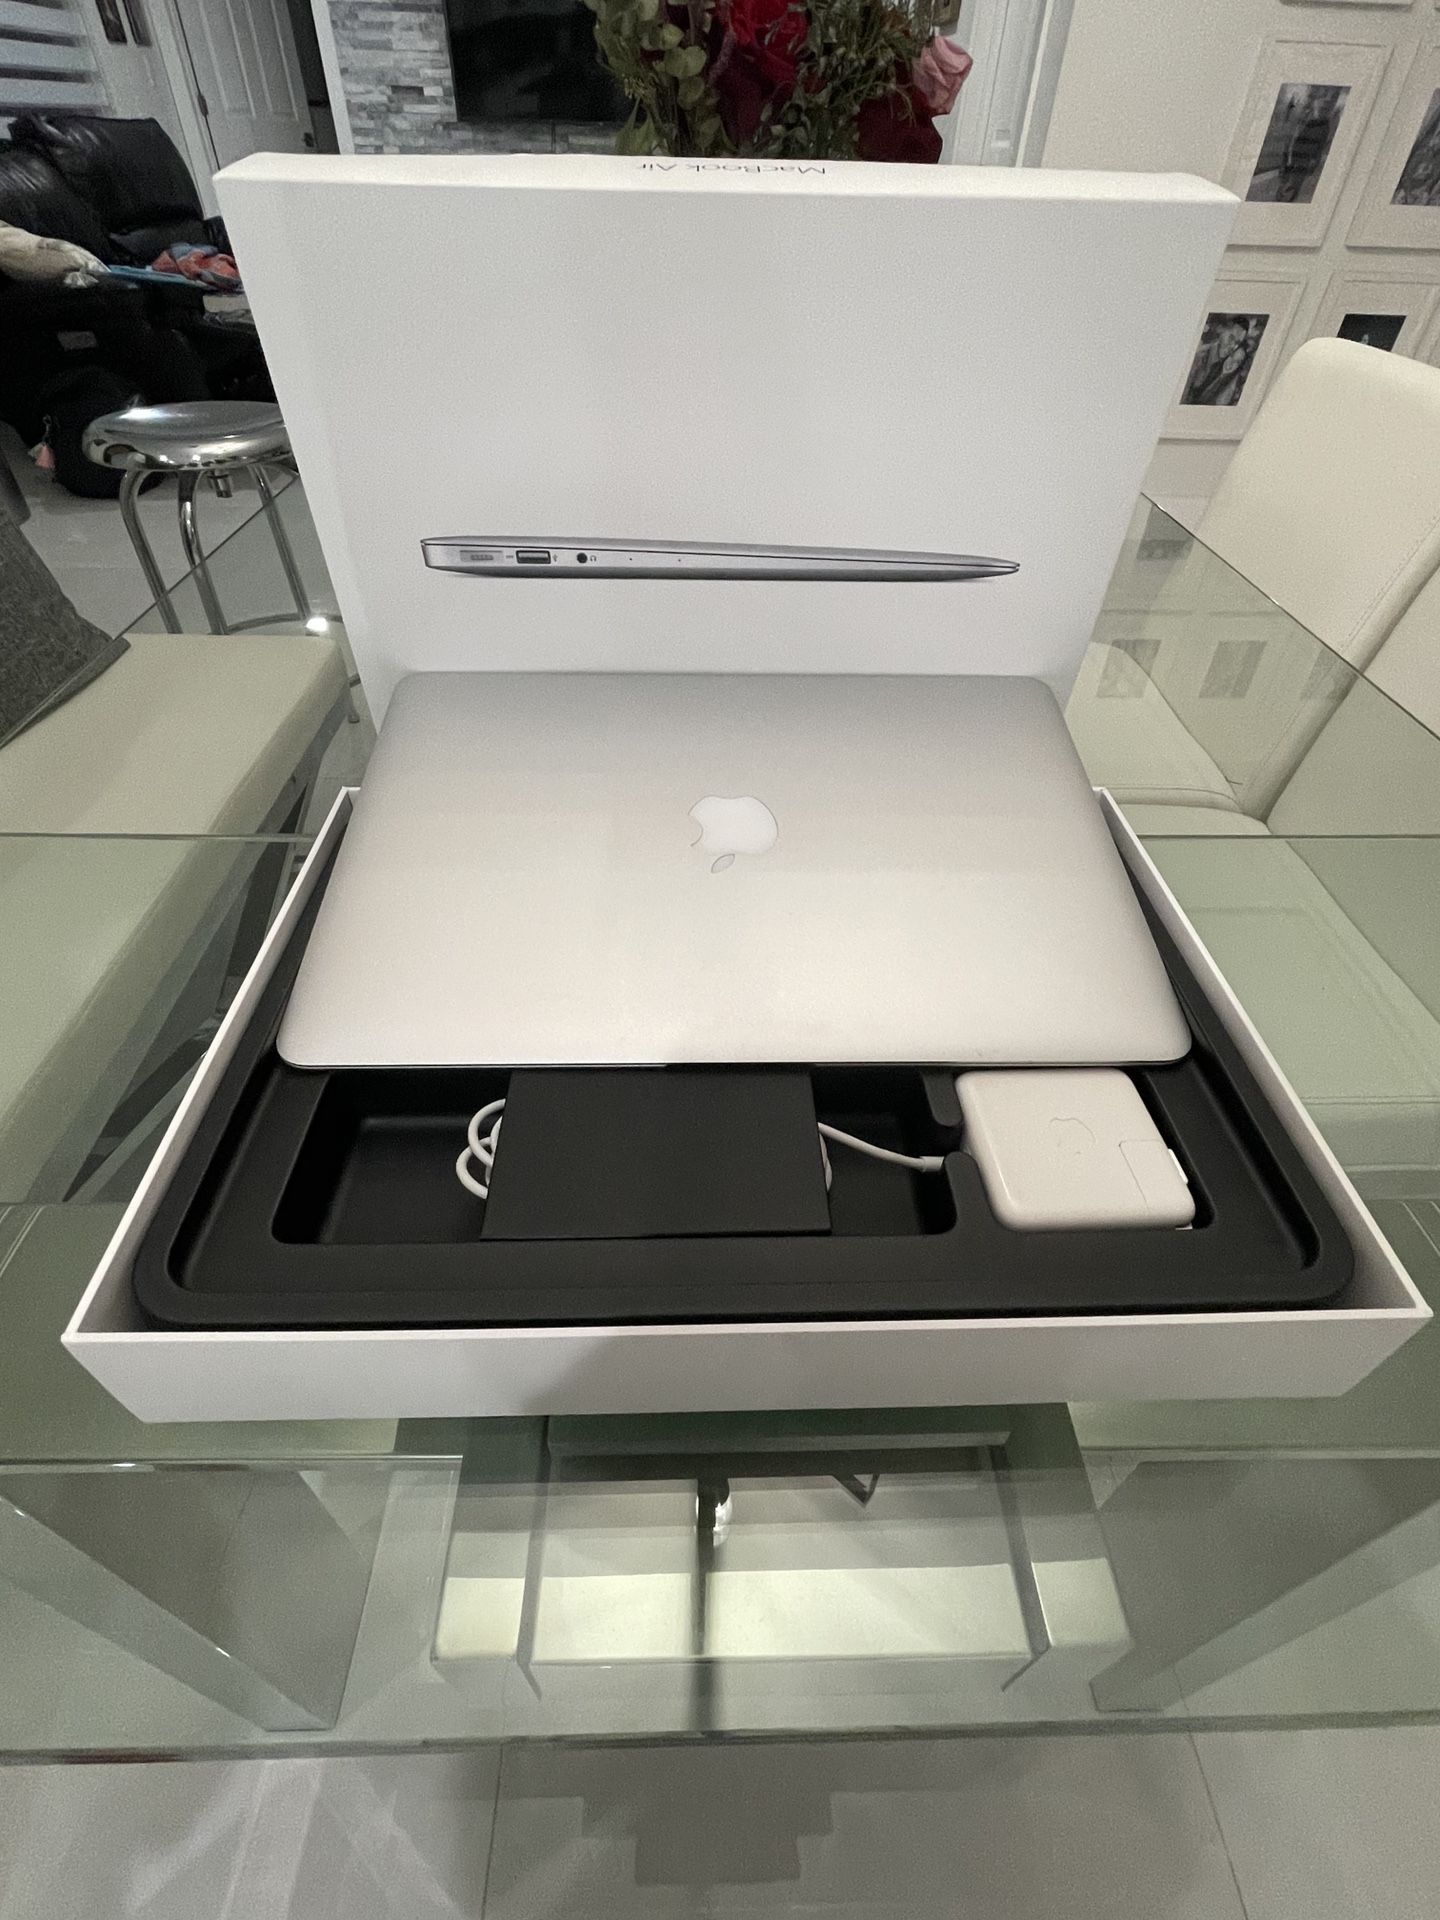 MacBook Air 13in 